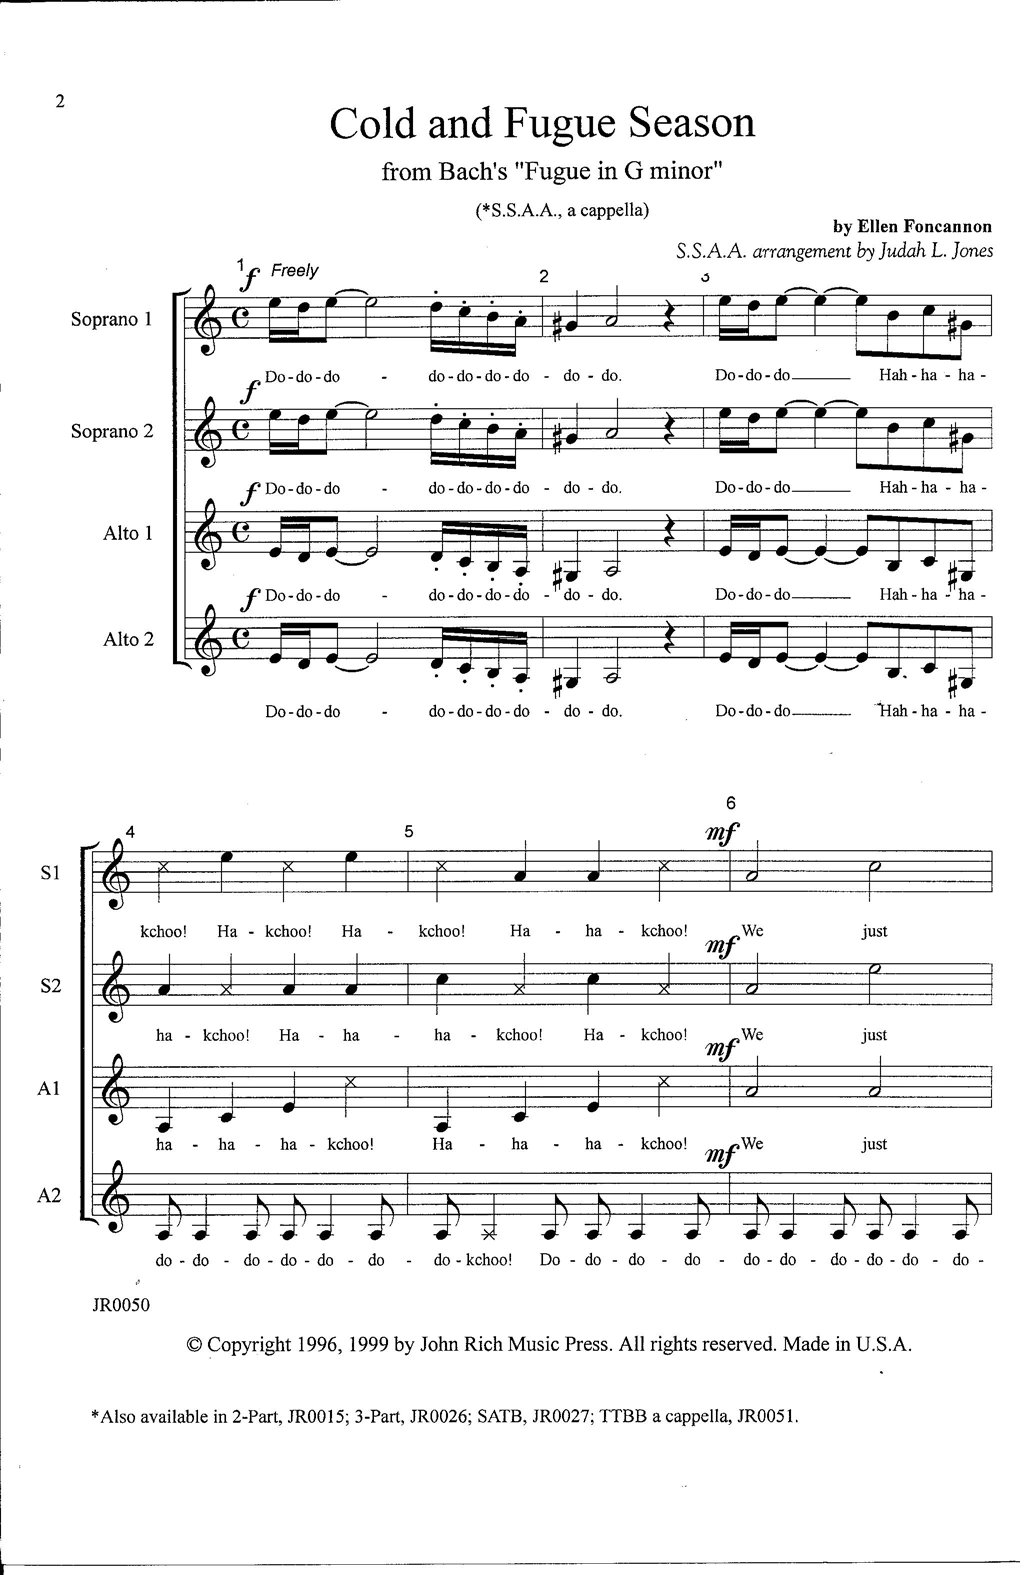 J.S. Bach Cold and Fugue Season (arr. Ellen Foncannon) Sheet Music Notes & Chords for SAB Choir - Download or Print PDF